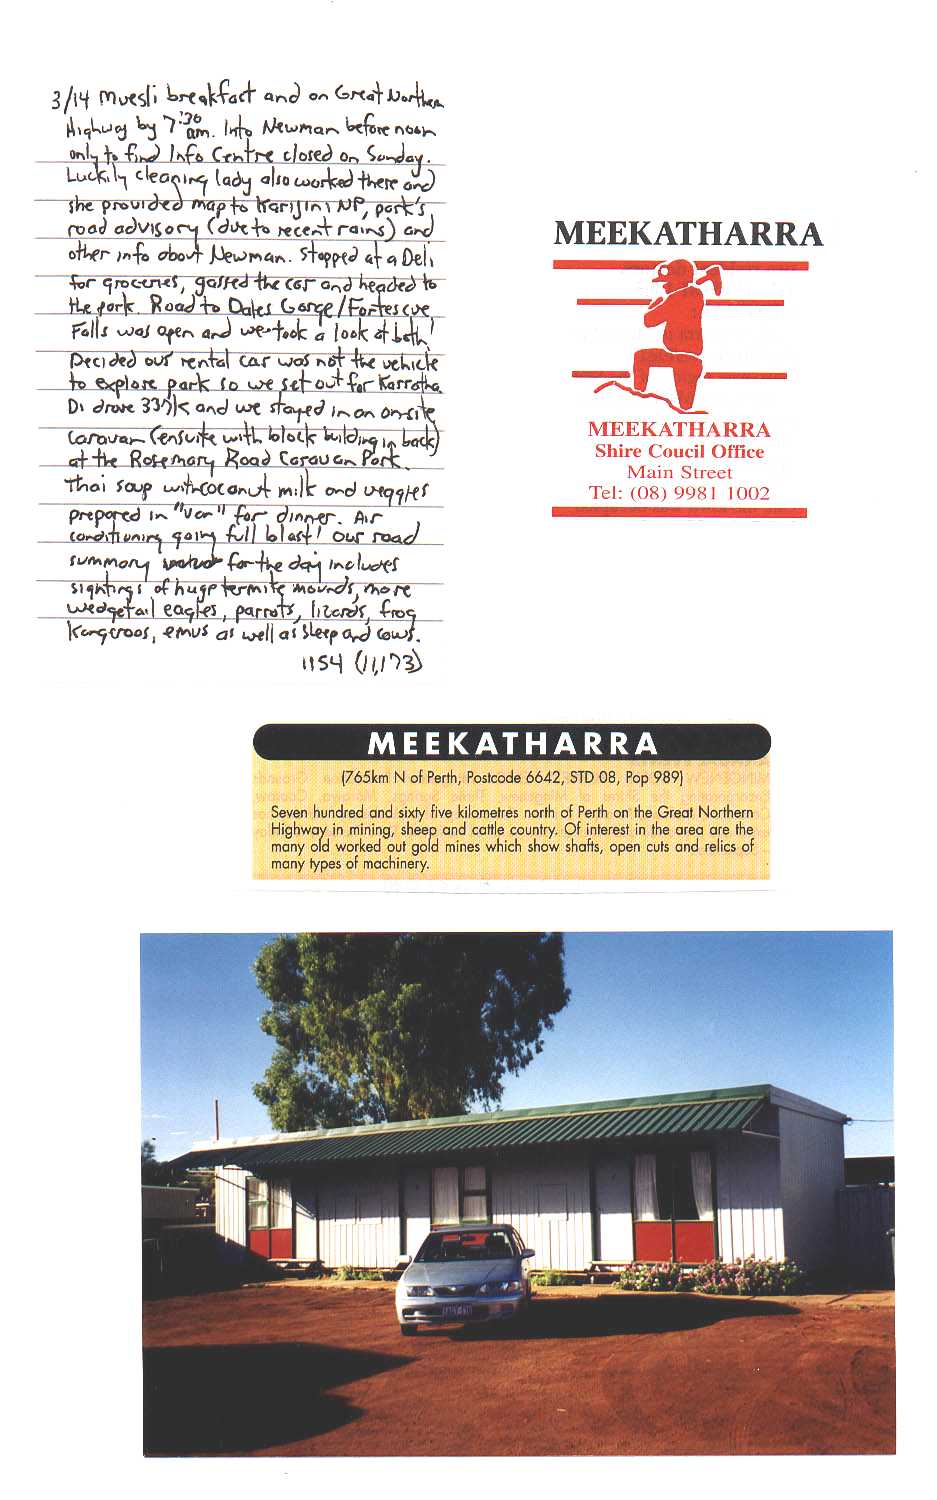 Meekatharra Australia